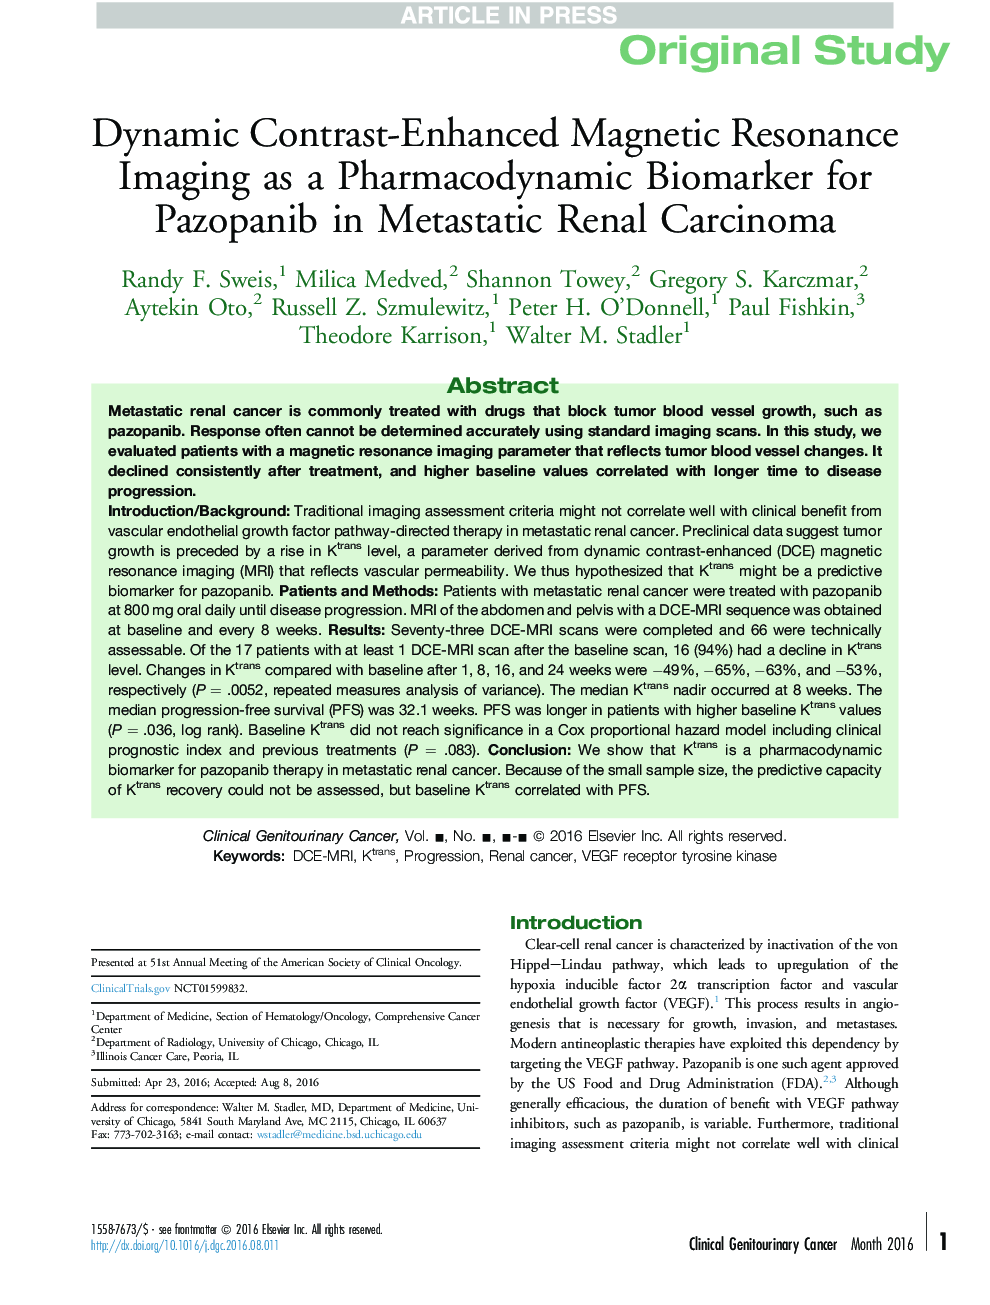 Dynamic Contrast-Enhanced Magnetic Resonance Imaging as a Pharmacodynamic Biomarker for Pazopanib in Metastatic Renal Carcinoma